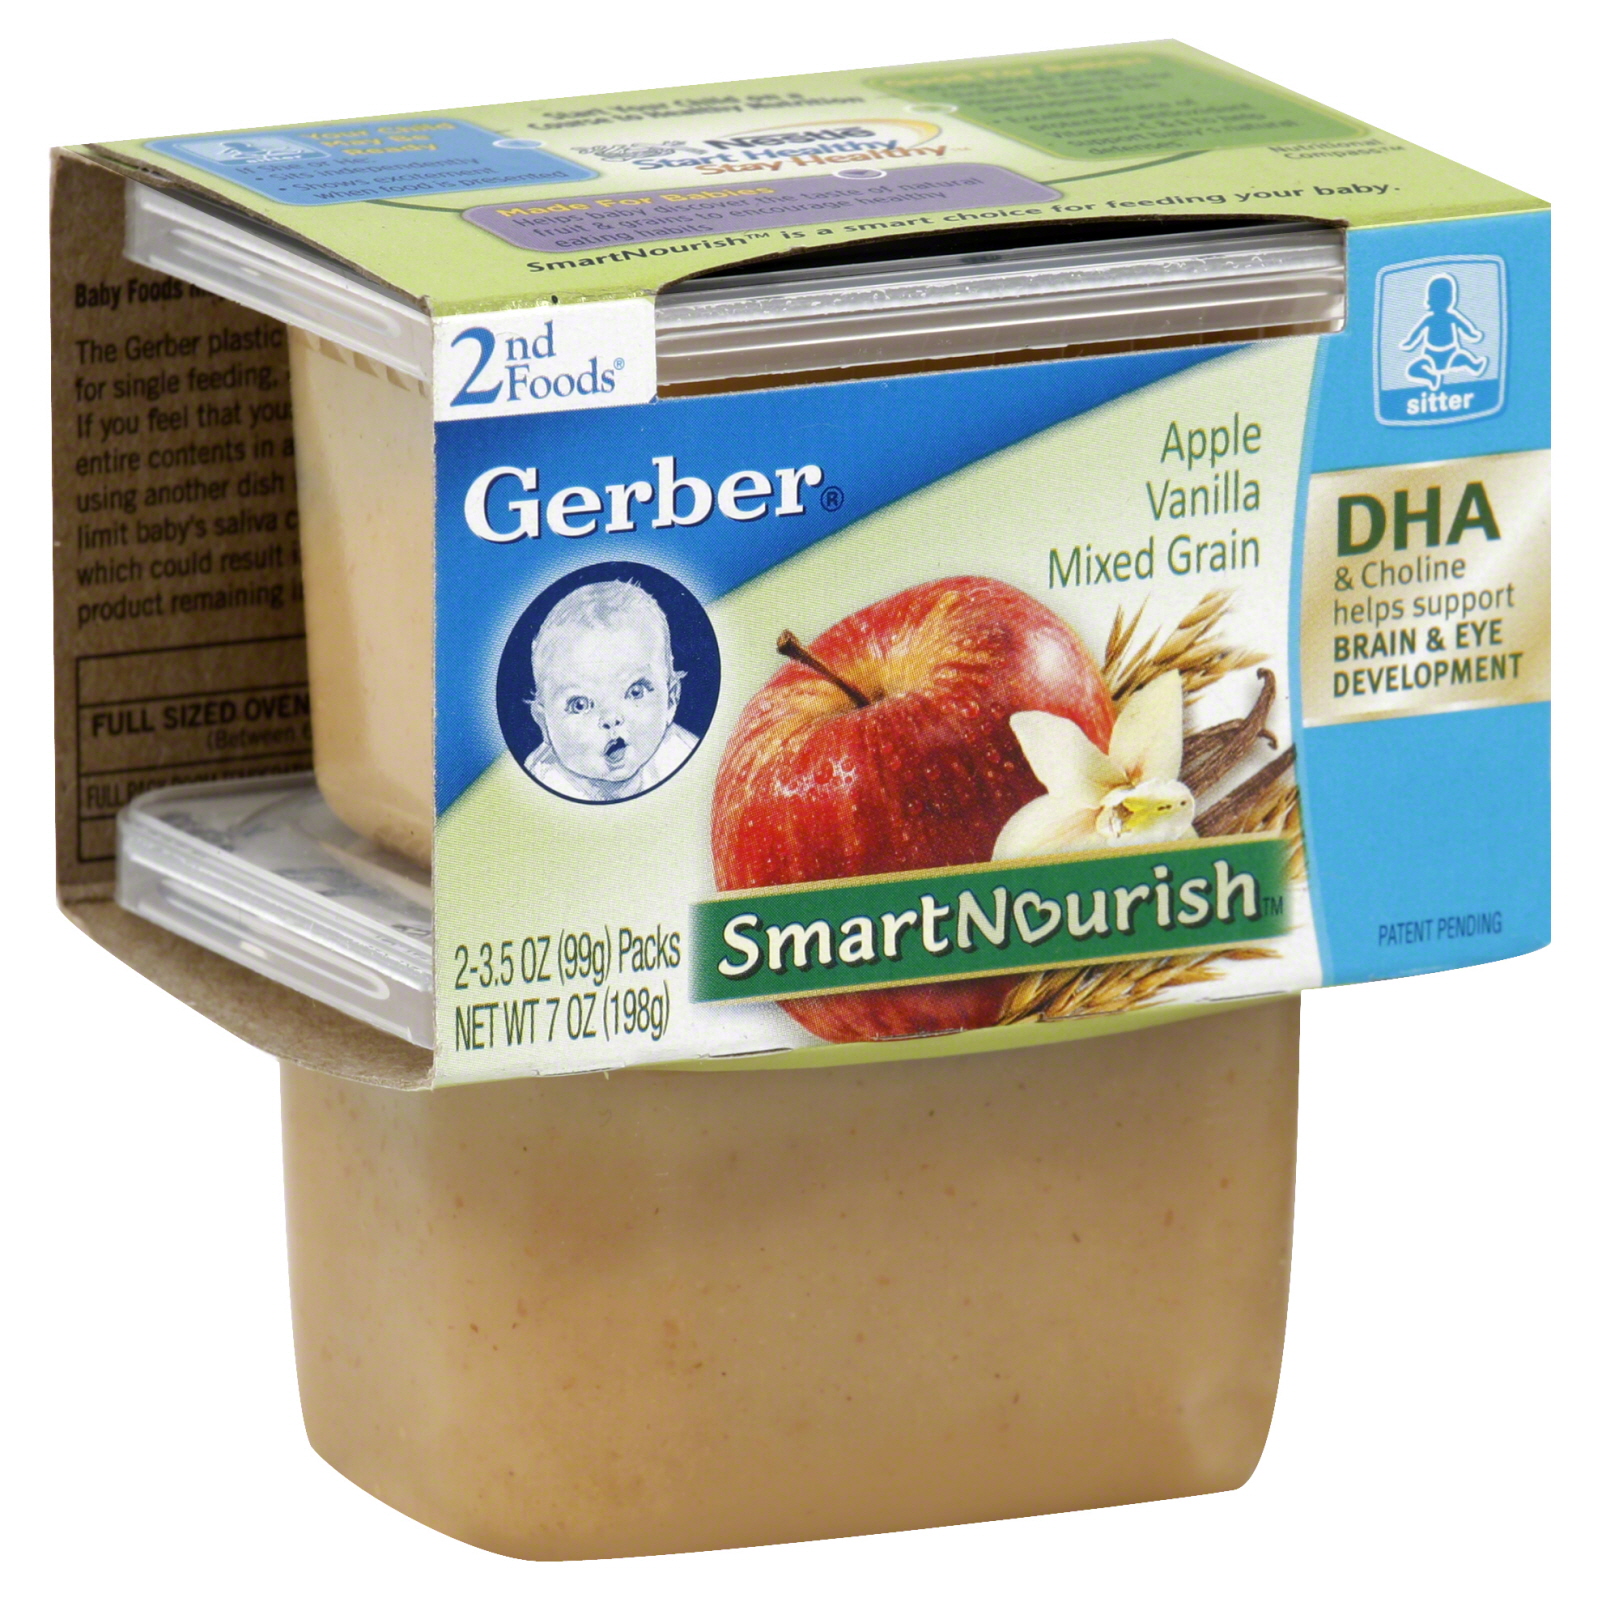 Gerber 2nd Foods SmartNourish Mixed Grain, Apple Vanilla, 2 - 3.5 oz (99 g) packs [7 oz (198 g)]